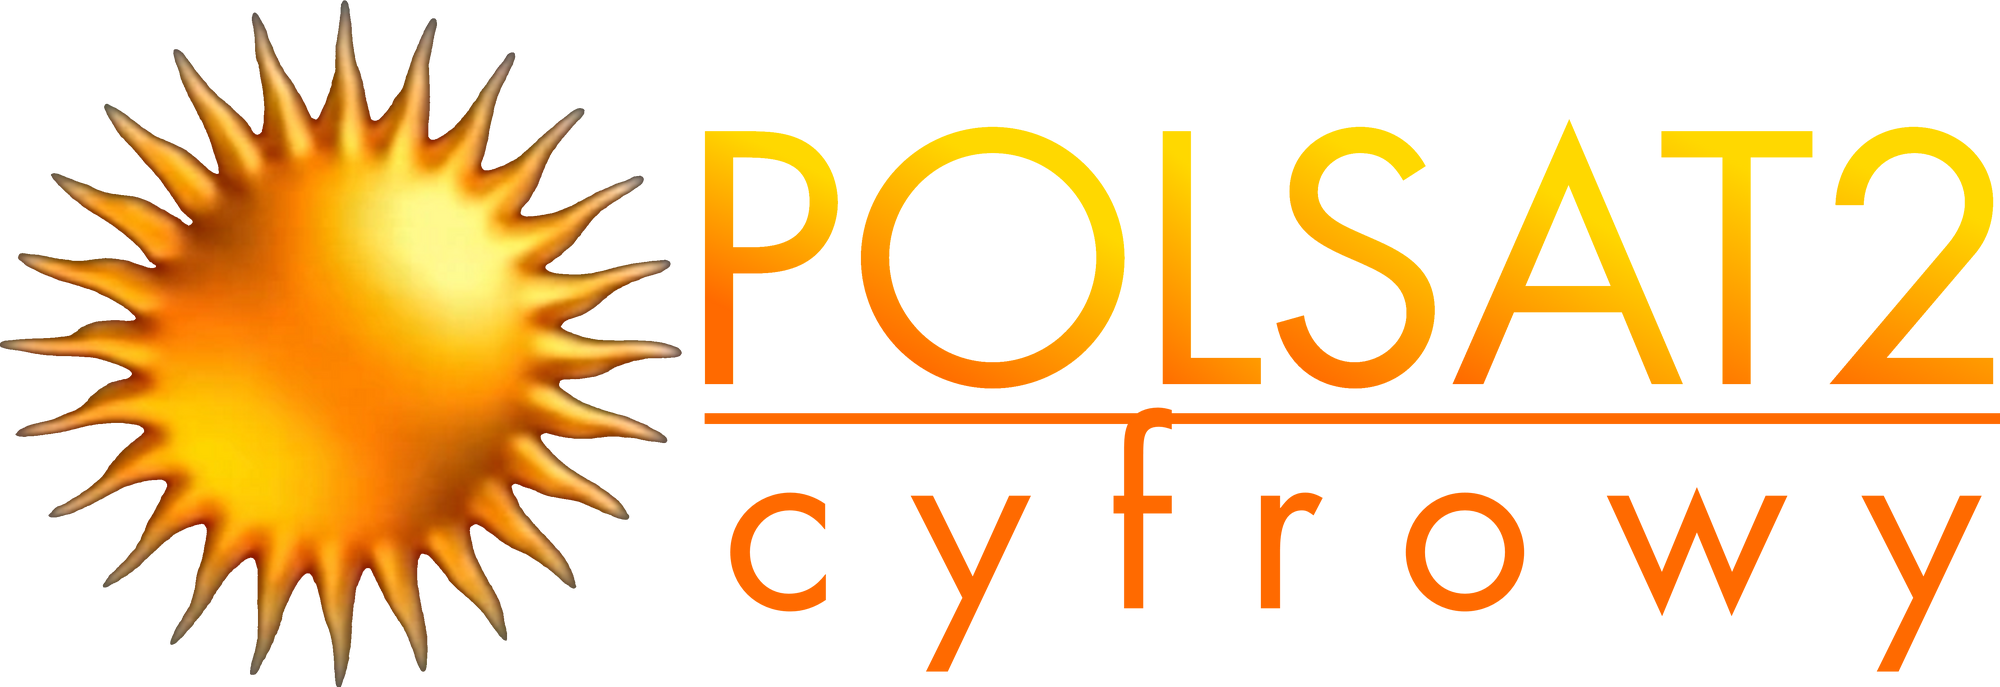 travel channel cyfrowy polsat